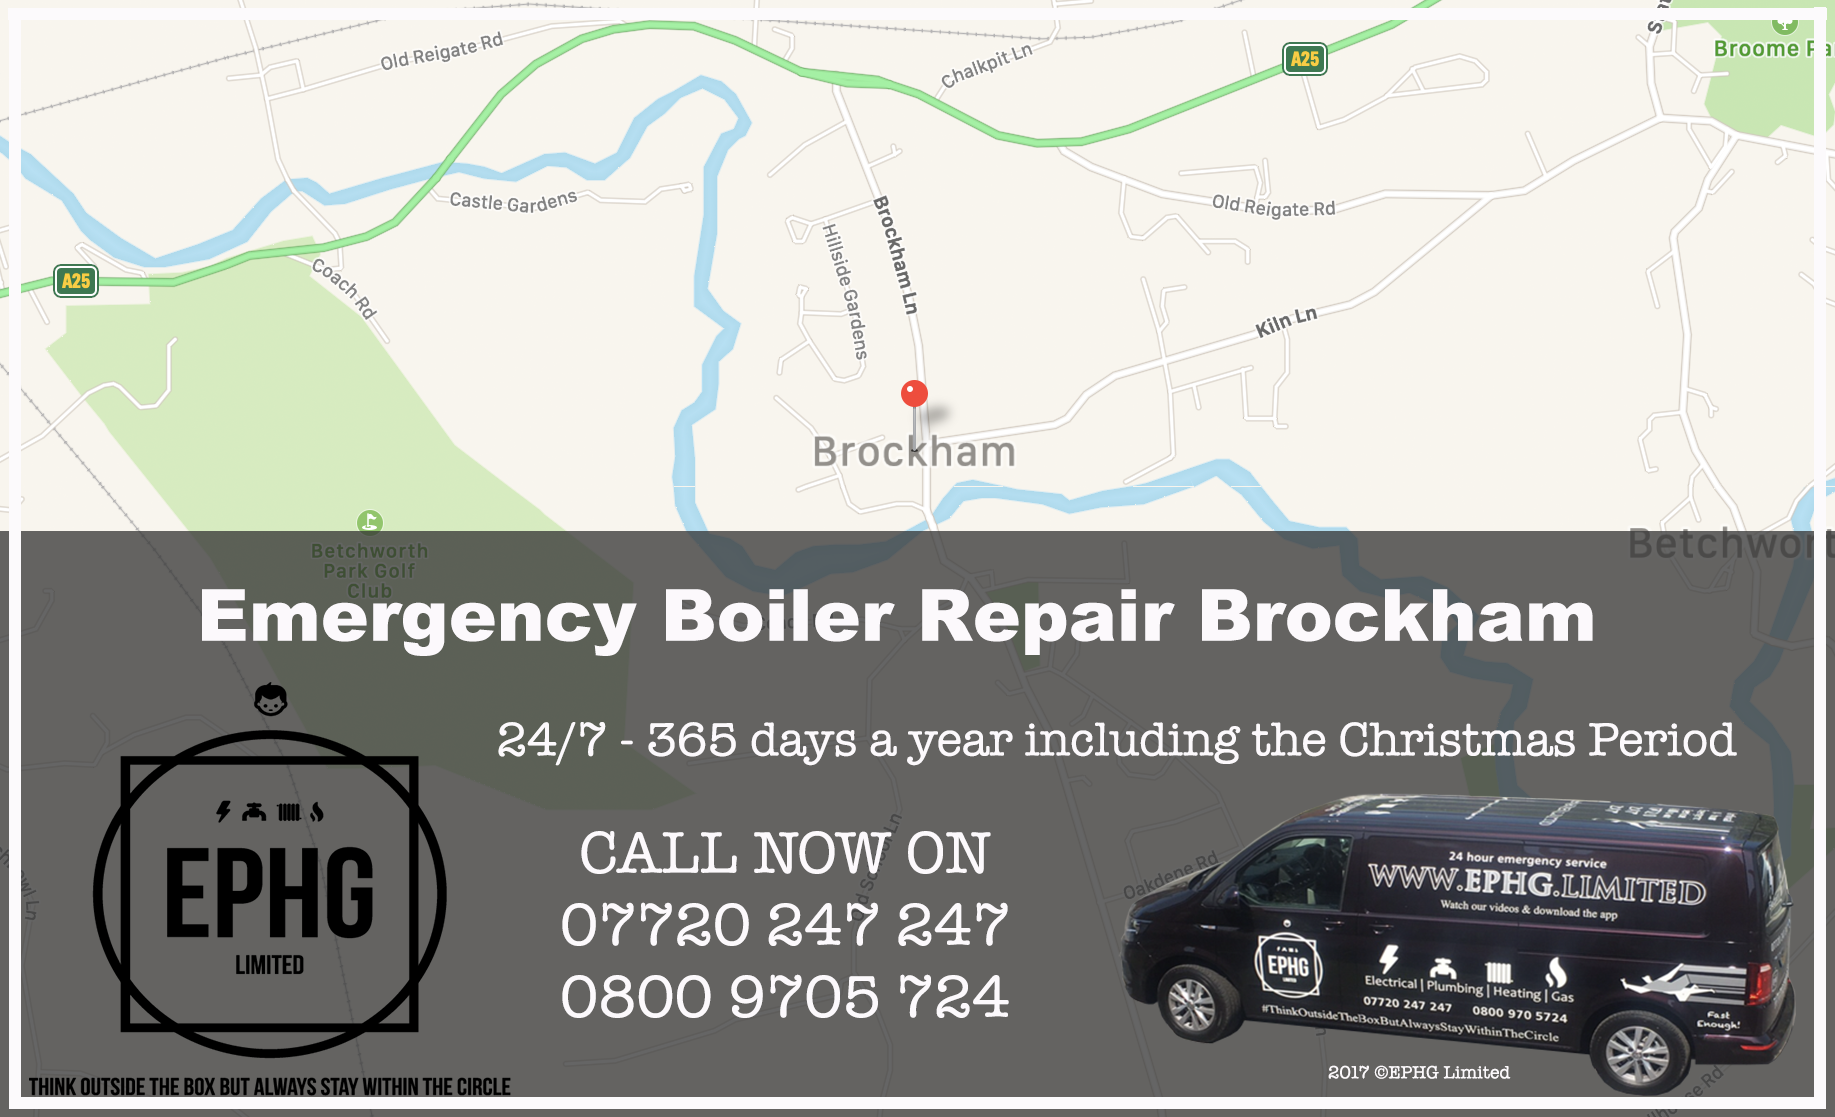 24 Hour Emergency Boiler Repair Brockham